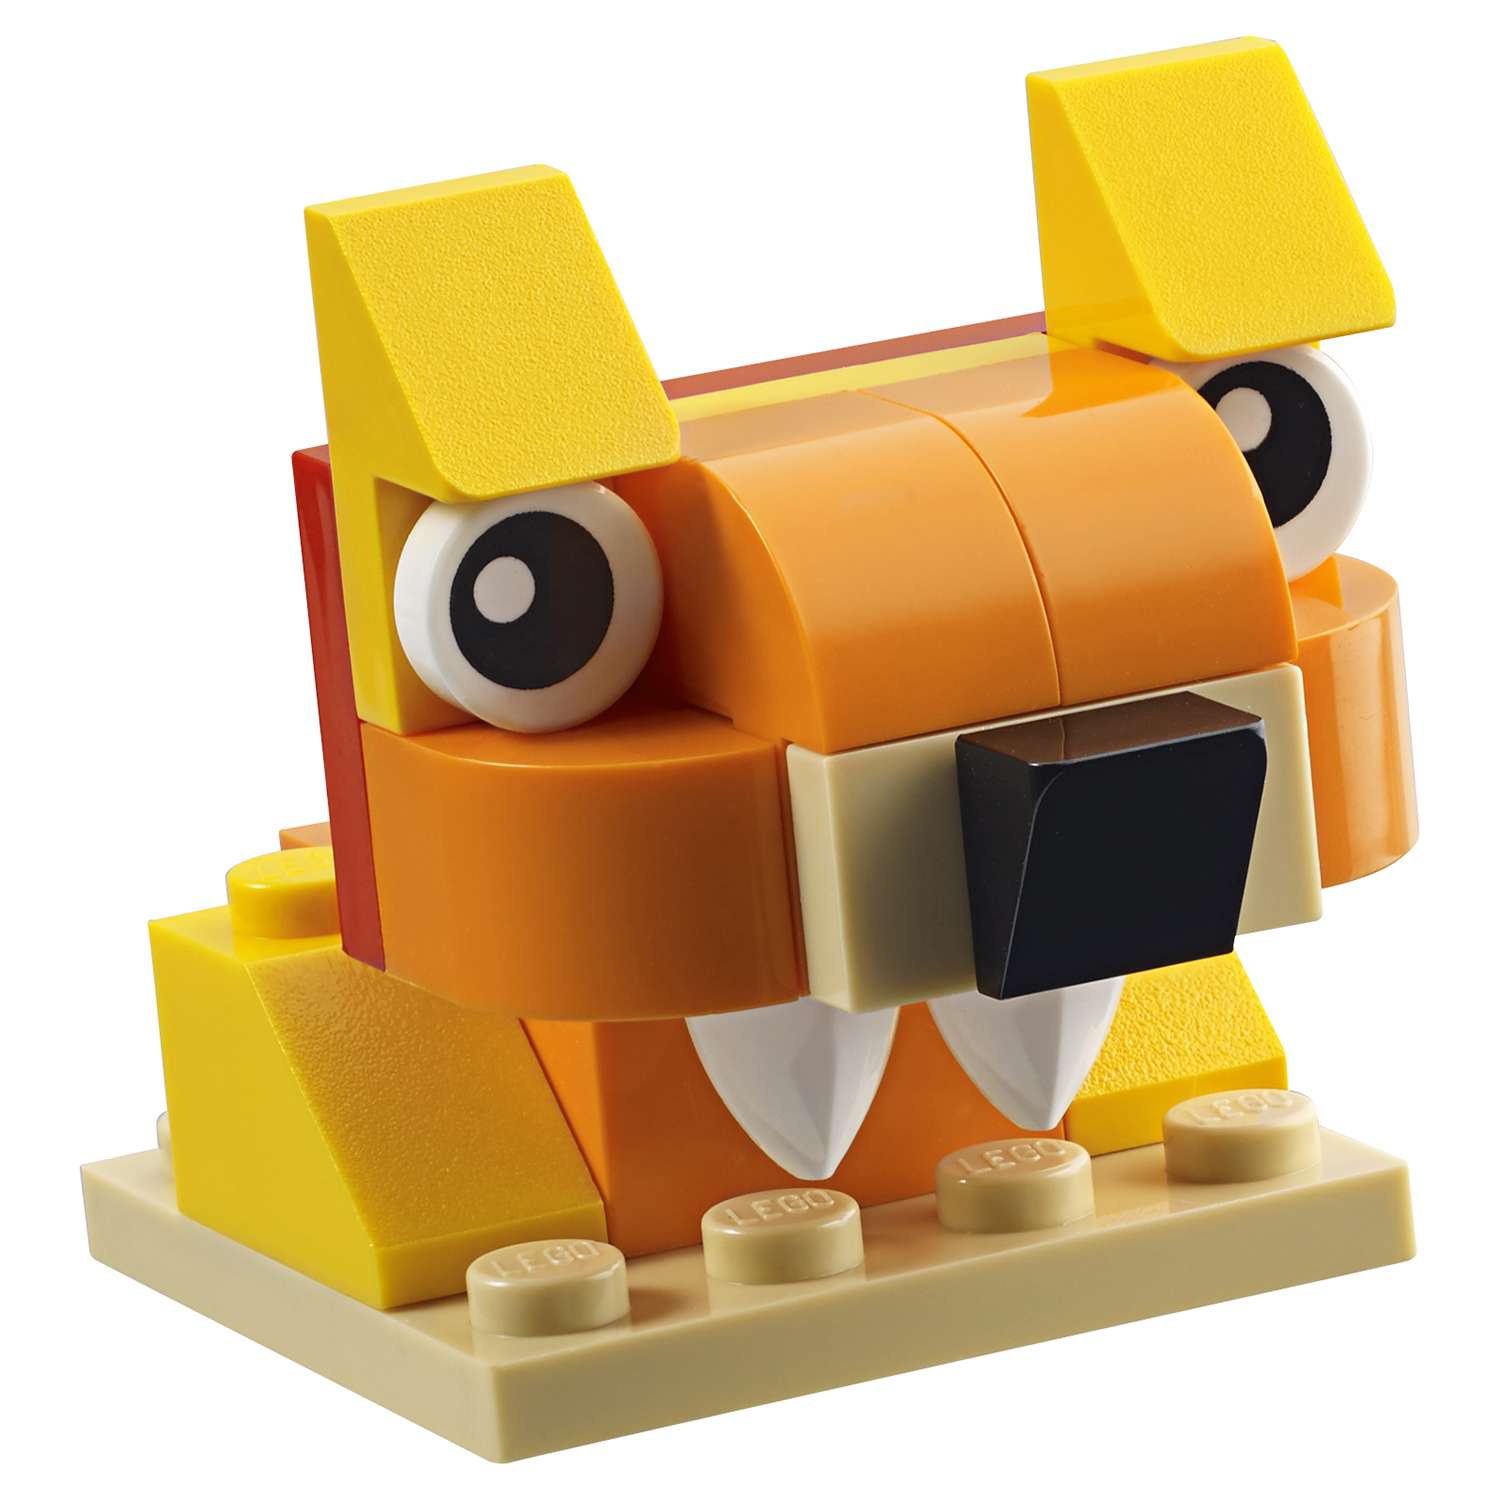 Конструктор LEGO Classic Оранжевый набор для творчества (10709) - фото 6